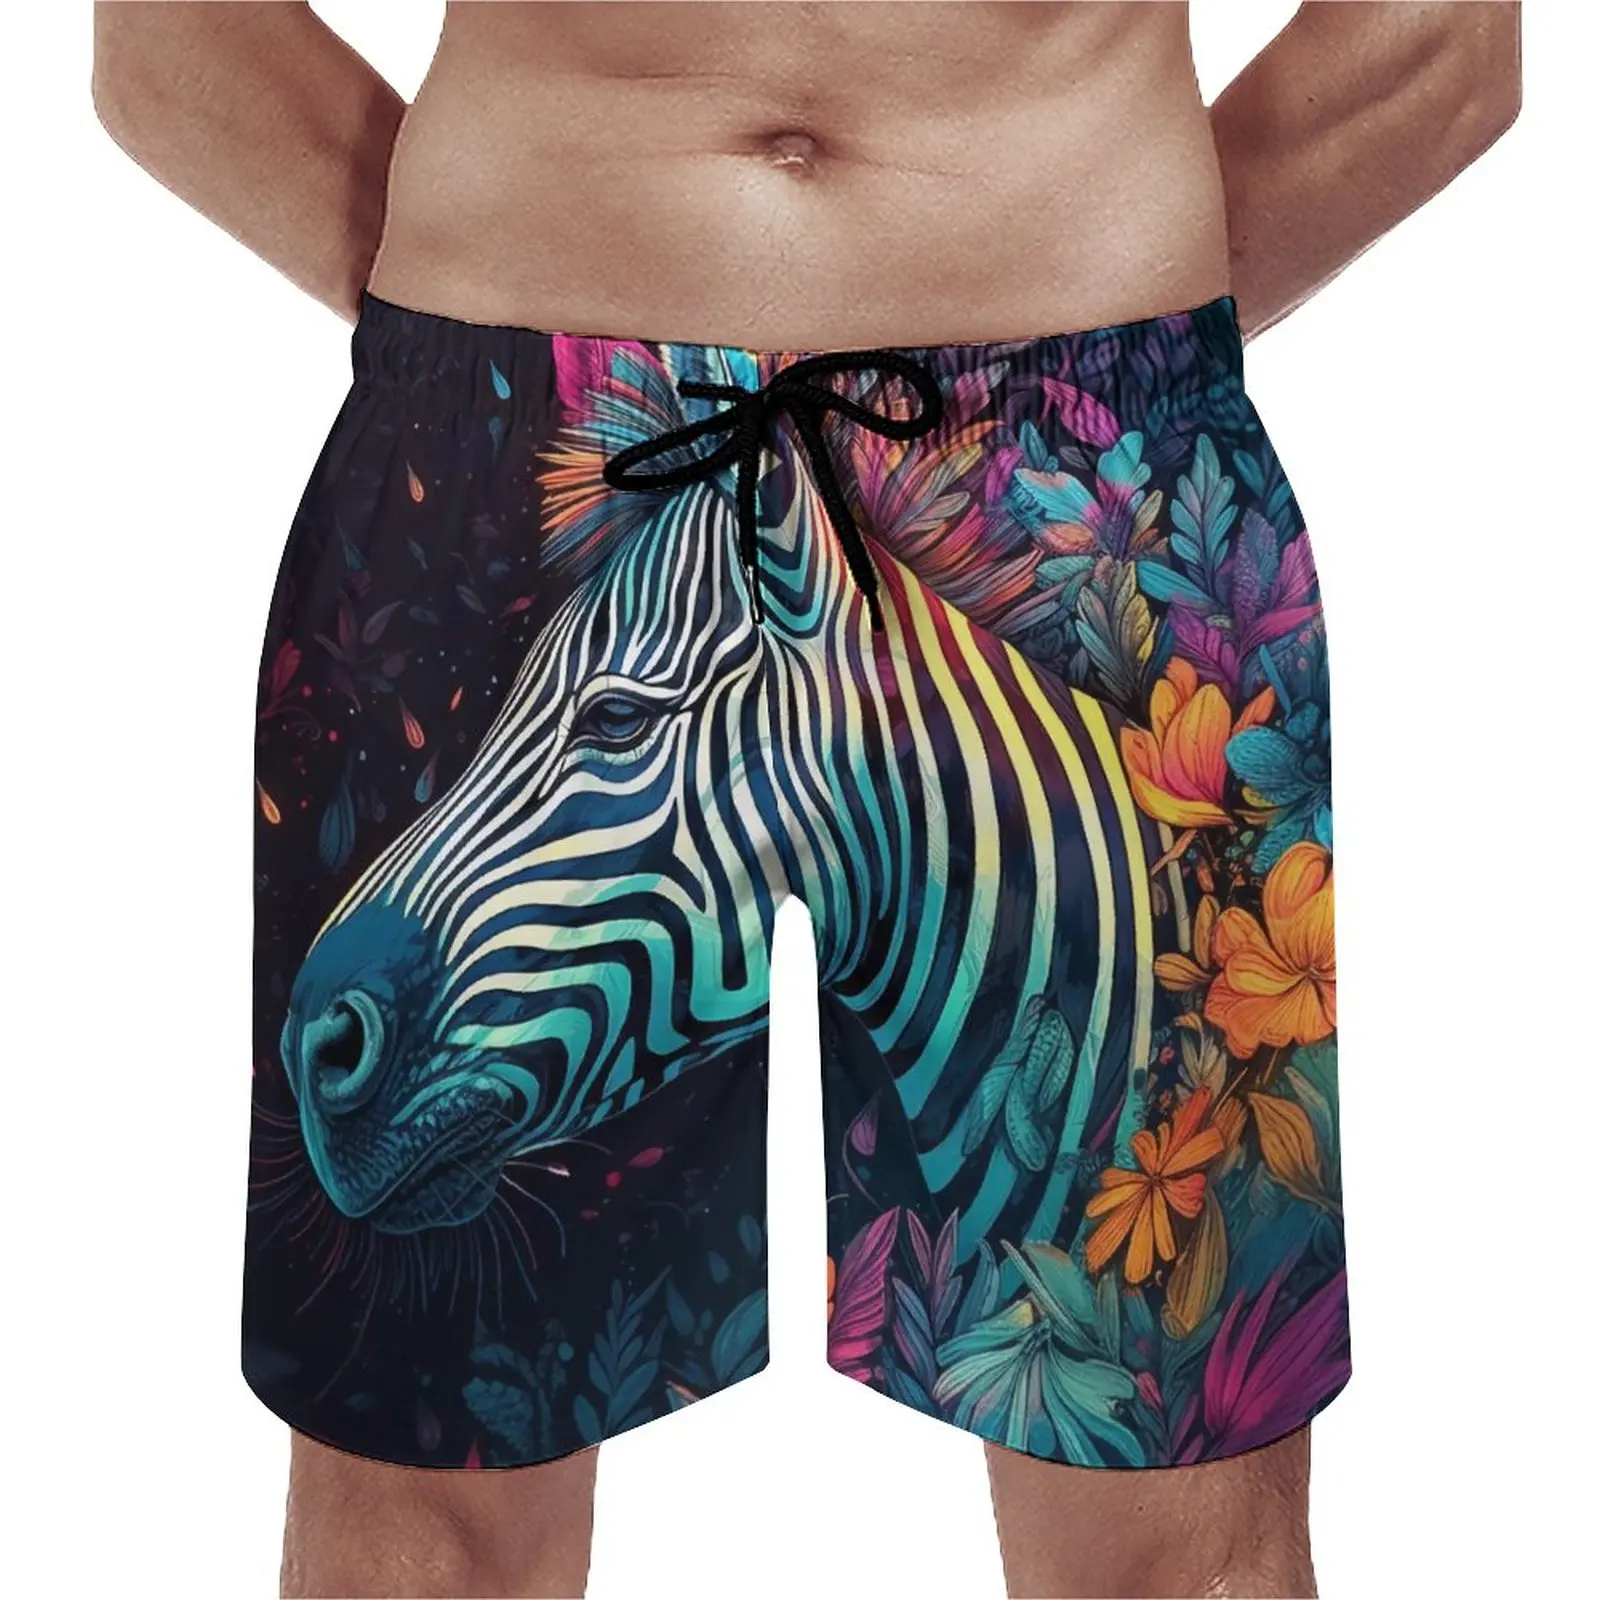 

Summer Gym Shorts Zebra Sports Surf Neon Colorful Painting Design Board Short Pants Fashion Quick Dry Swim Trunks Plus Size